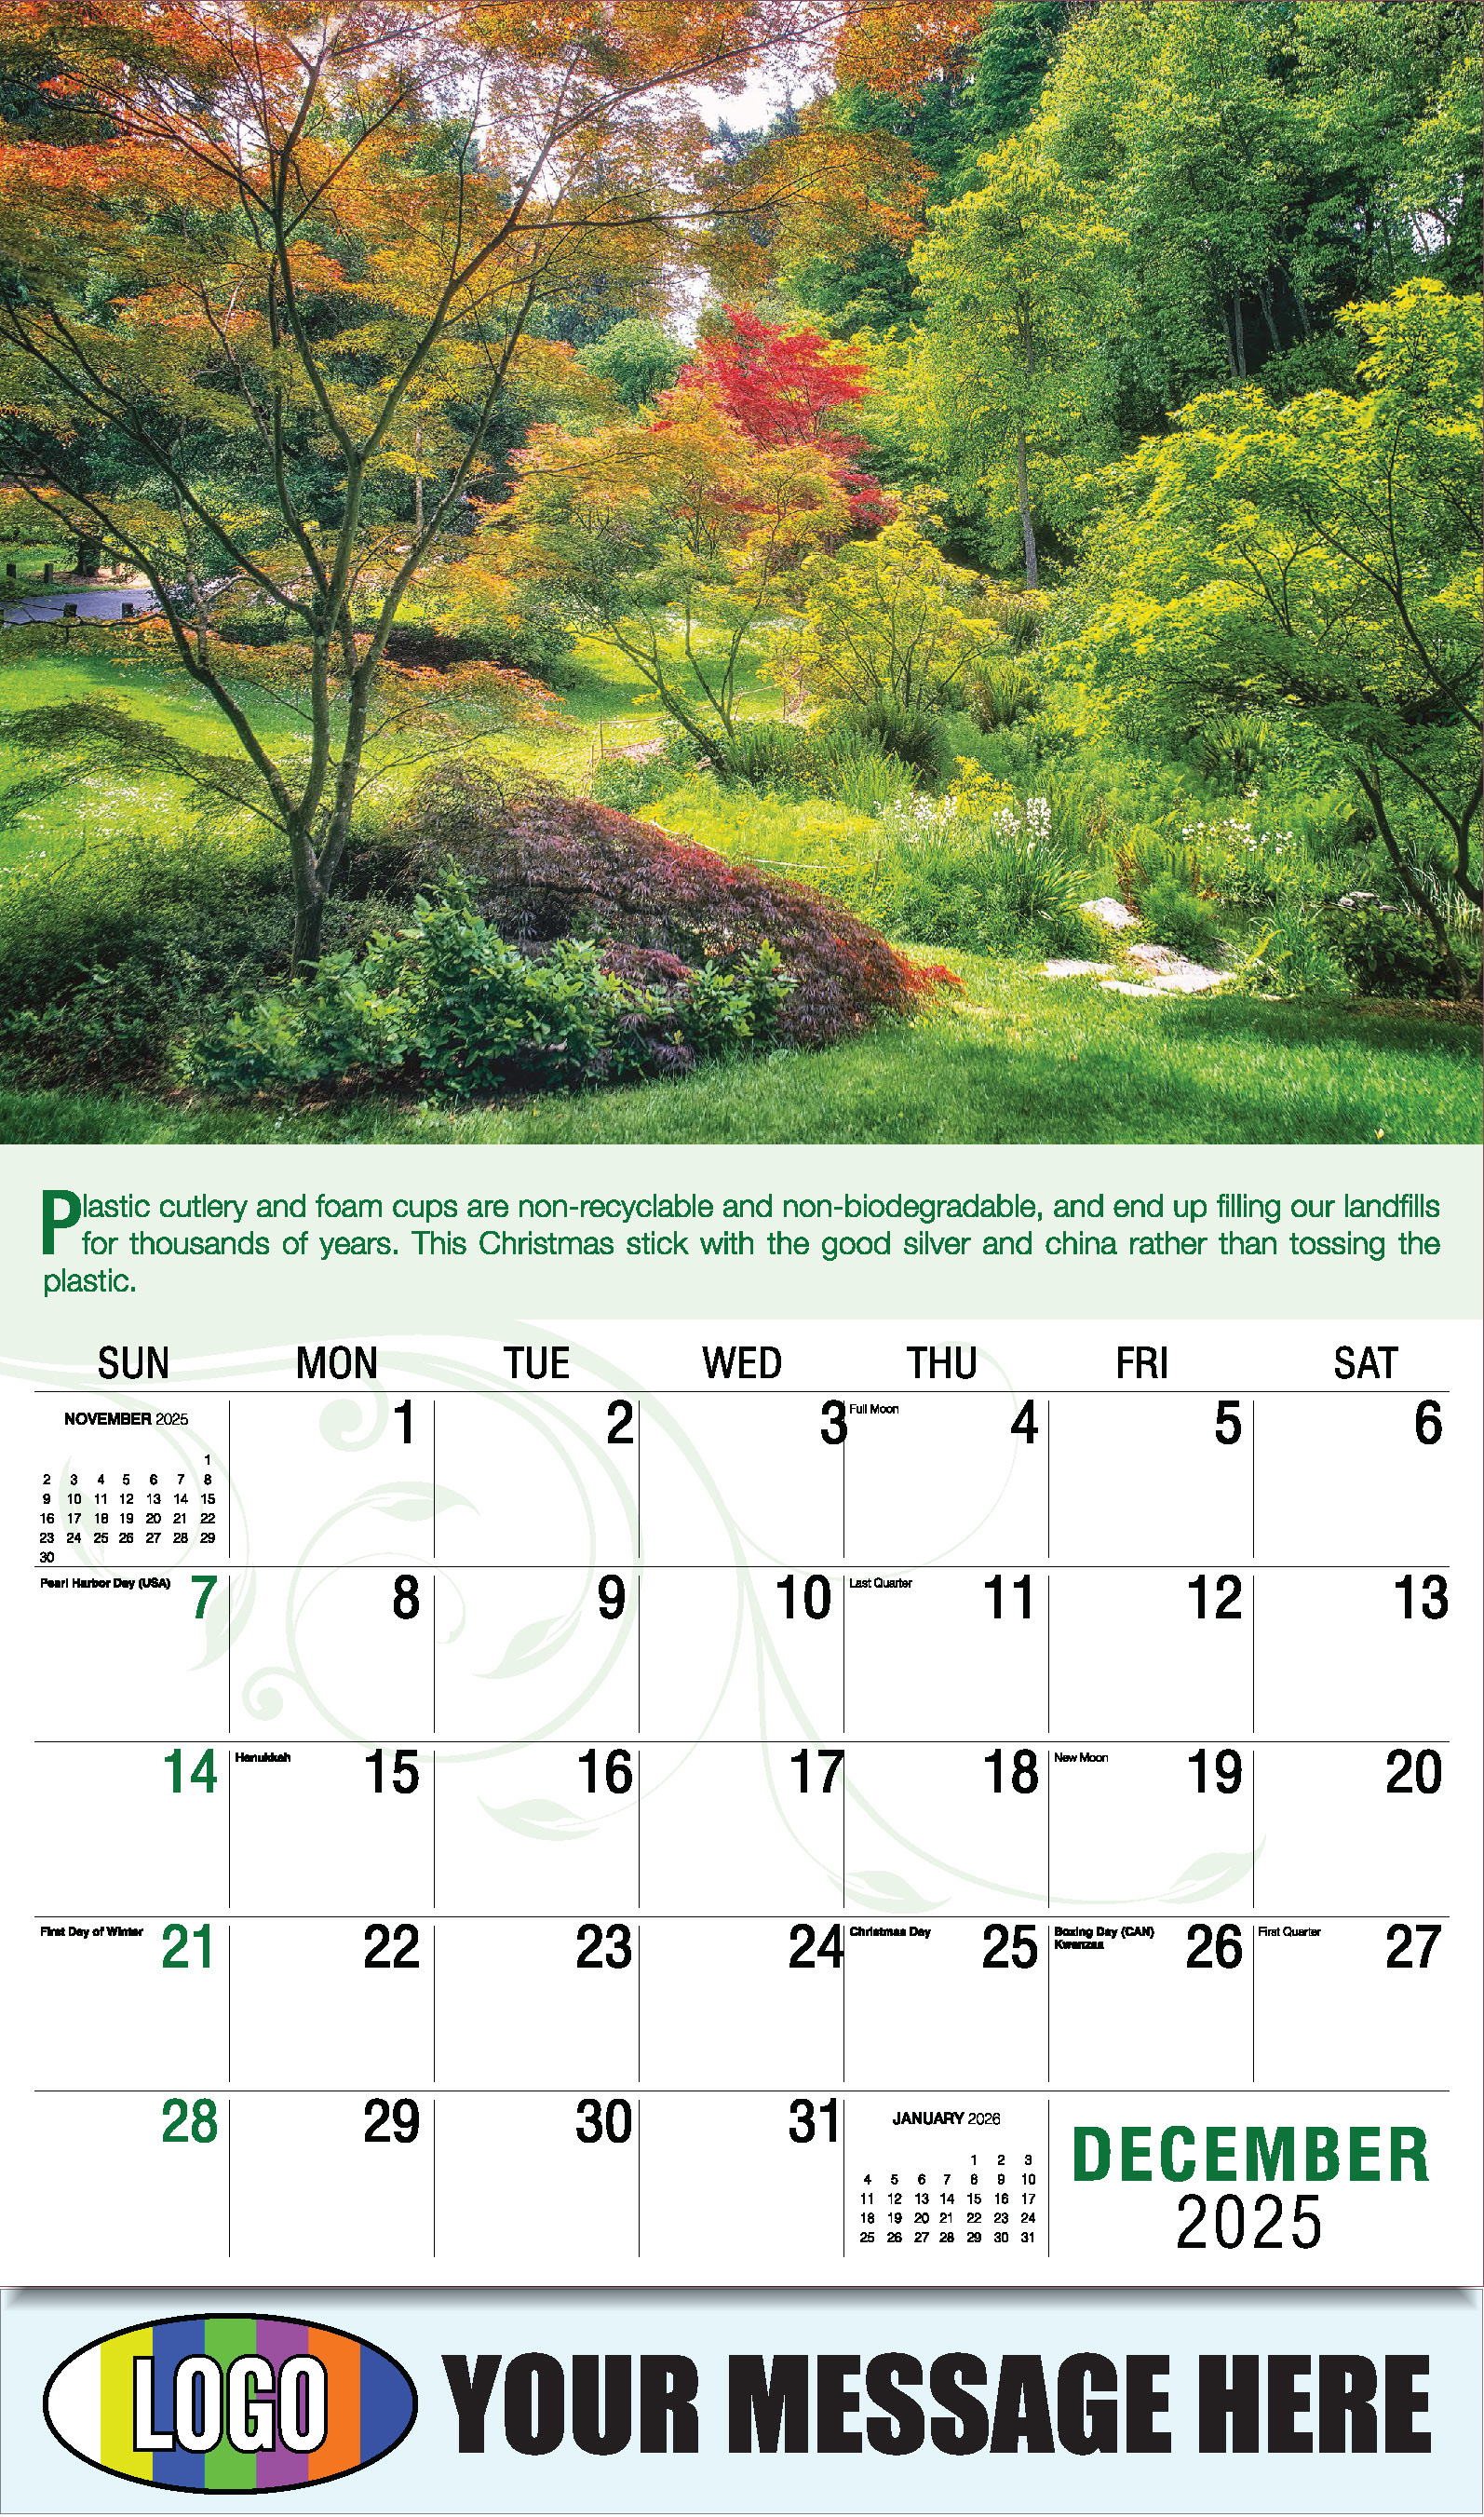 Go Green 2025 Business Promotion Calendar - December